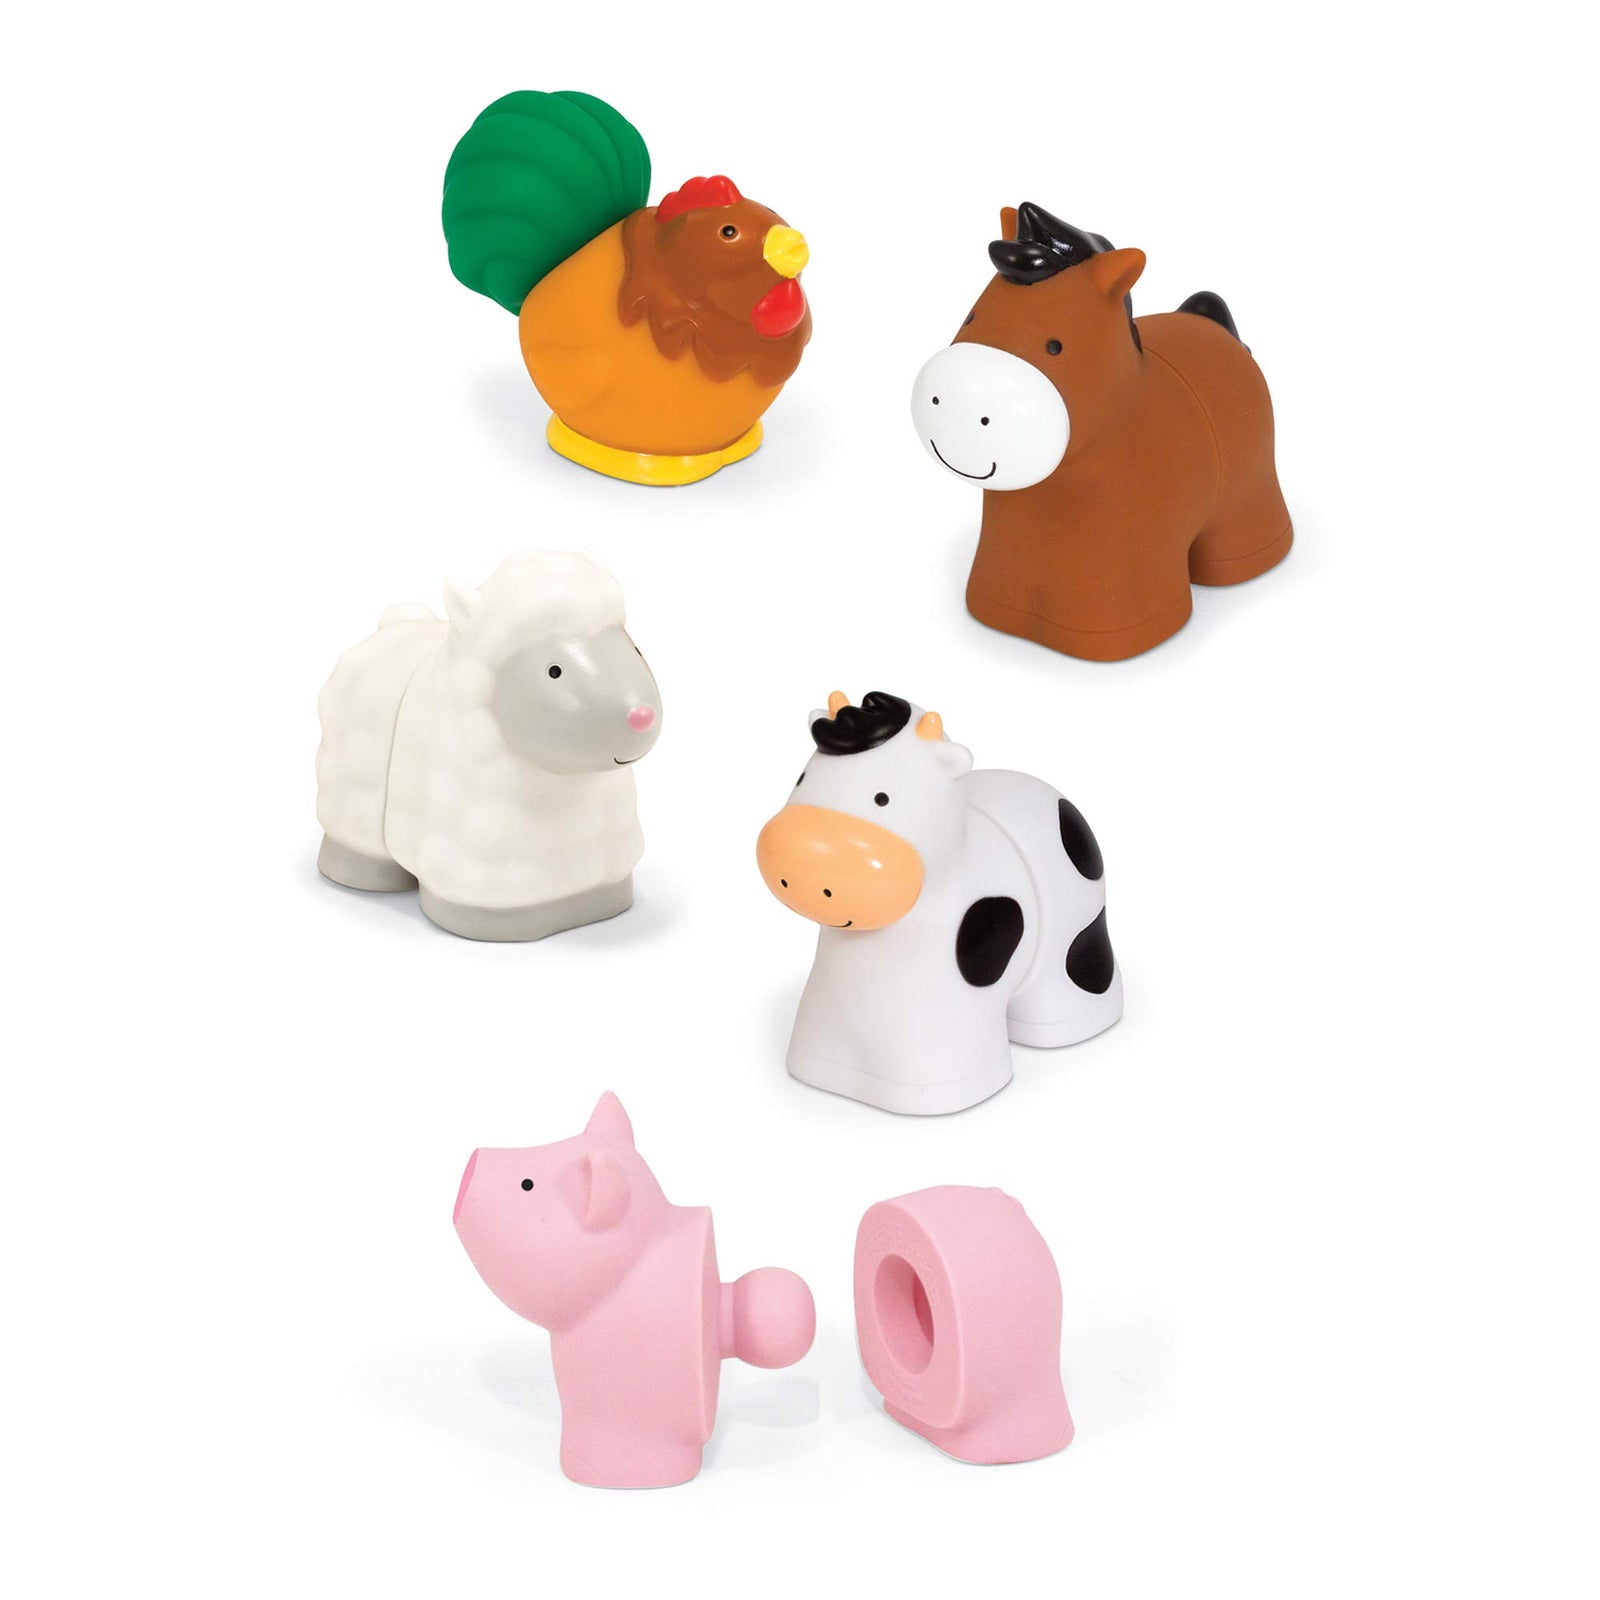 Melissa & Doug Pop Blocs Farm Animals Educational Baby Toy - 10 Linkable Pieces